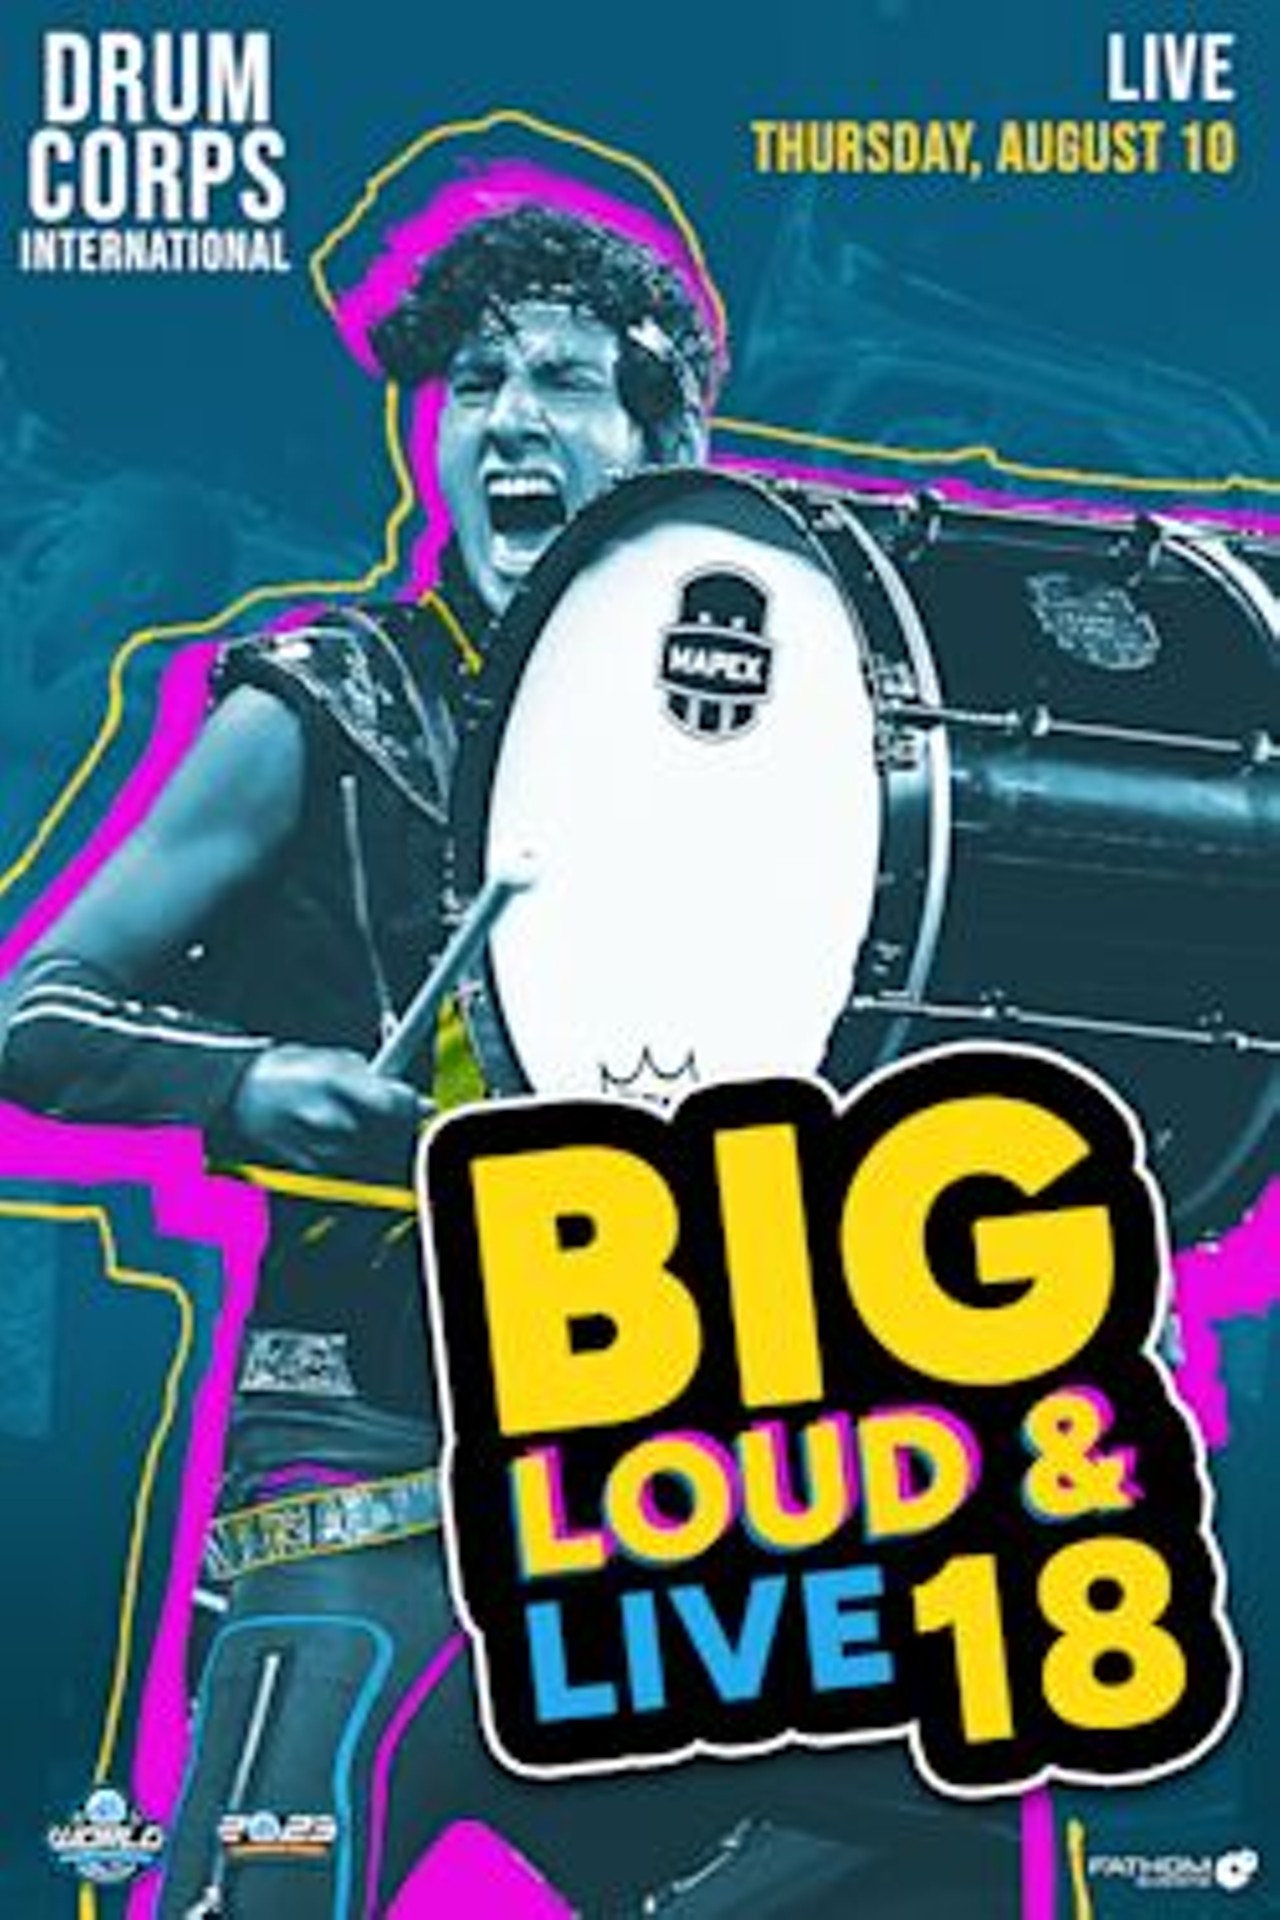 DCI 2023 Big, Loud & Live 18 Dallas Observer The Leading